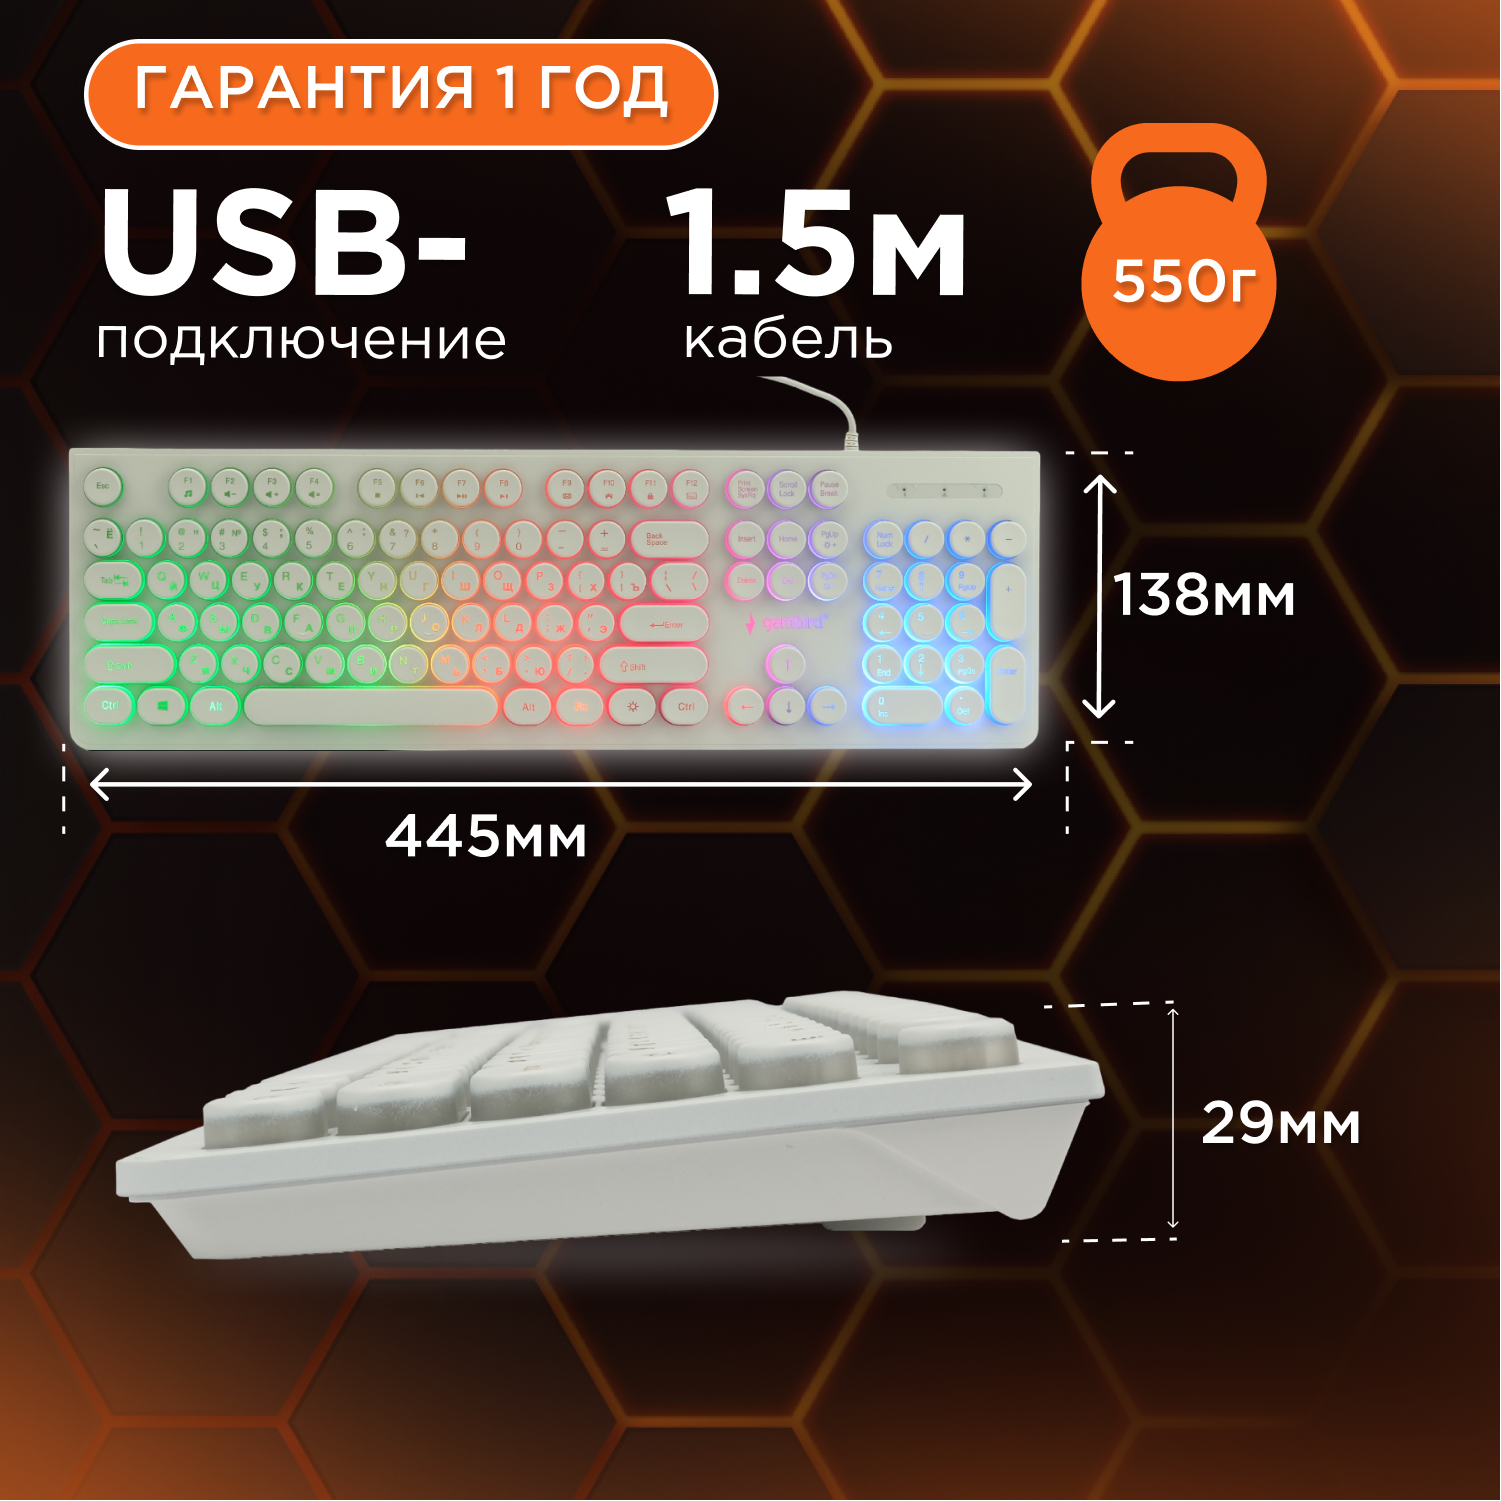 Клавиатура с подсветкой Gembird USB подсветка Rainbow кабель 1.5м белый KB-240L-W